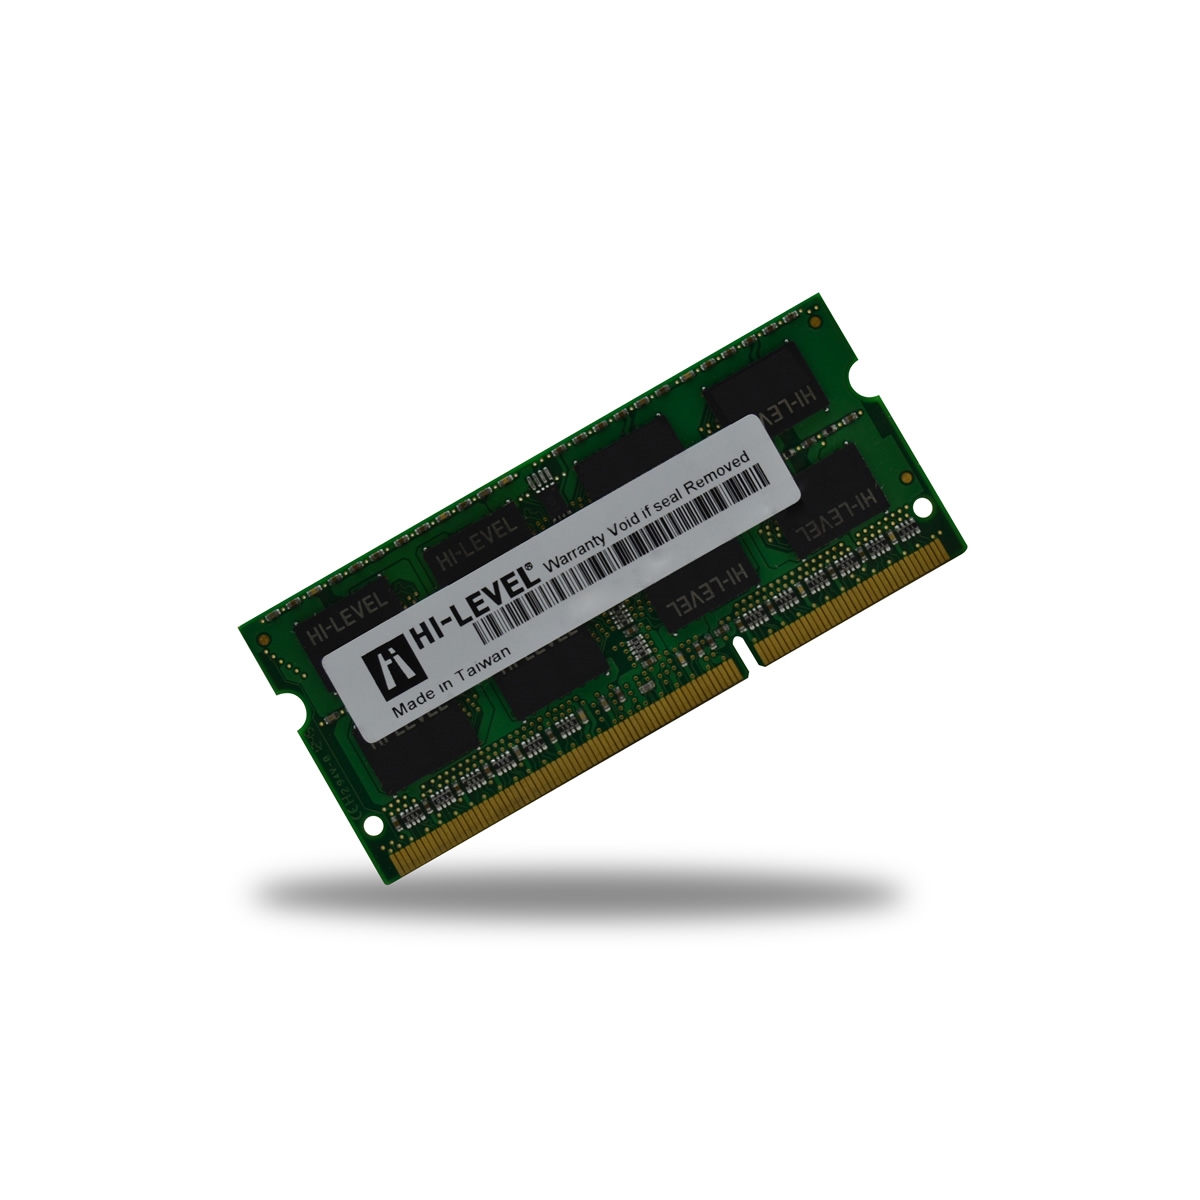 HI-LEVEL 4GB 2400MHz DDR4 NOTEBOOK RAM HLV-SOPC19200D4-4G